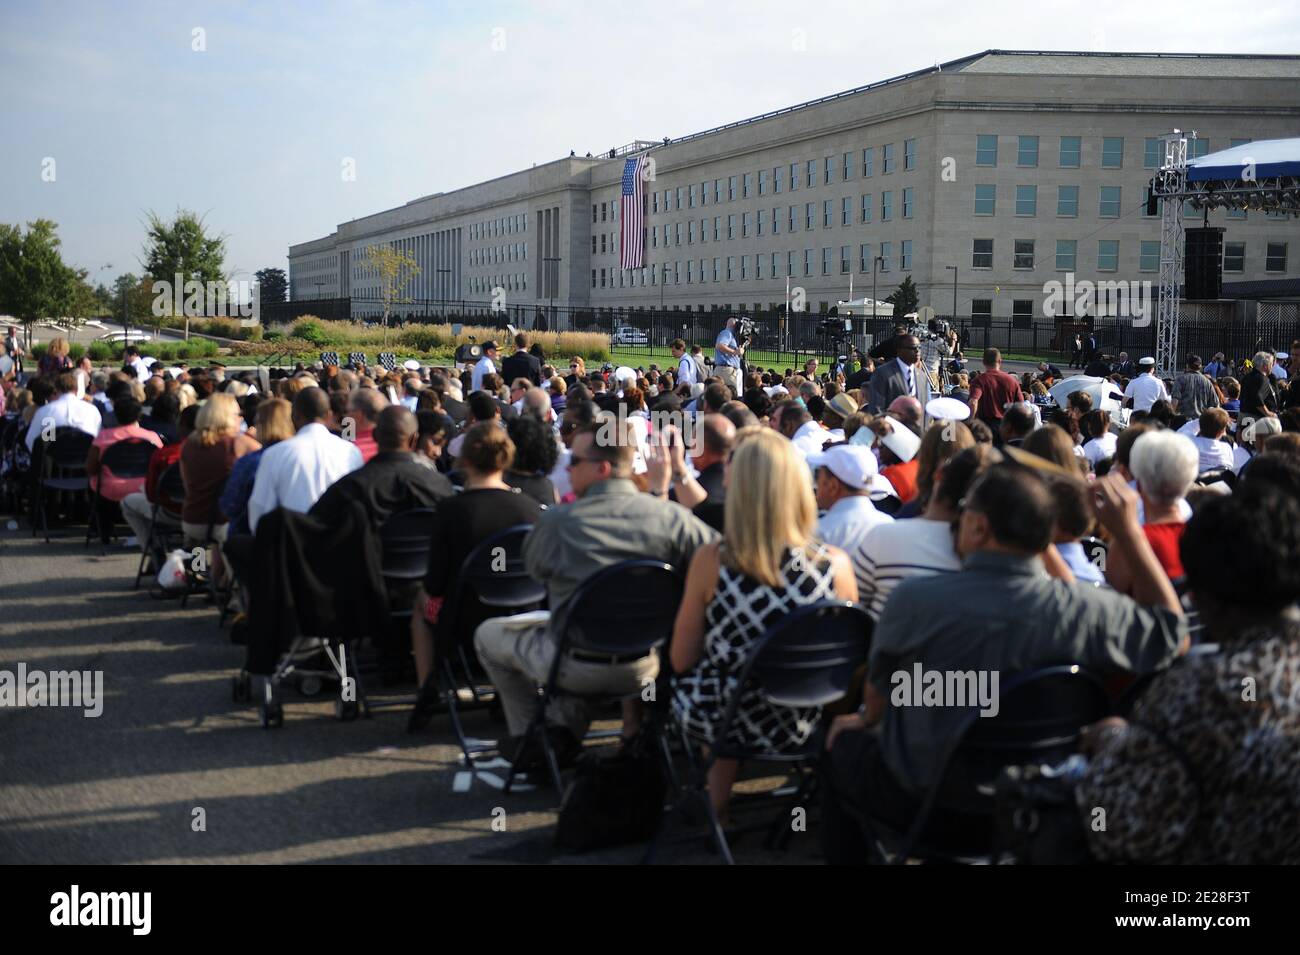 The Pentagon commemorates the 10th anniversary of 9/11 2001 terrorist attacks on September 11, 2011 in Arlington, VA, USA,. Photo by Olivier Douliery/ABACAPRESS.COM Stock Photo